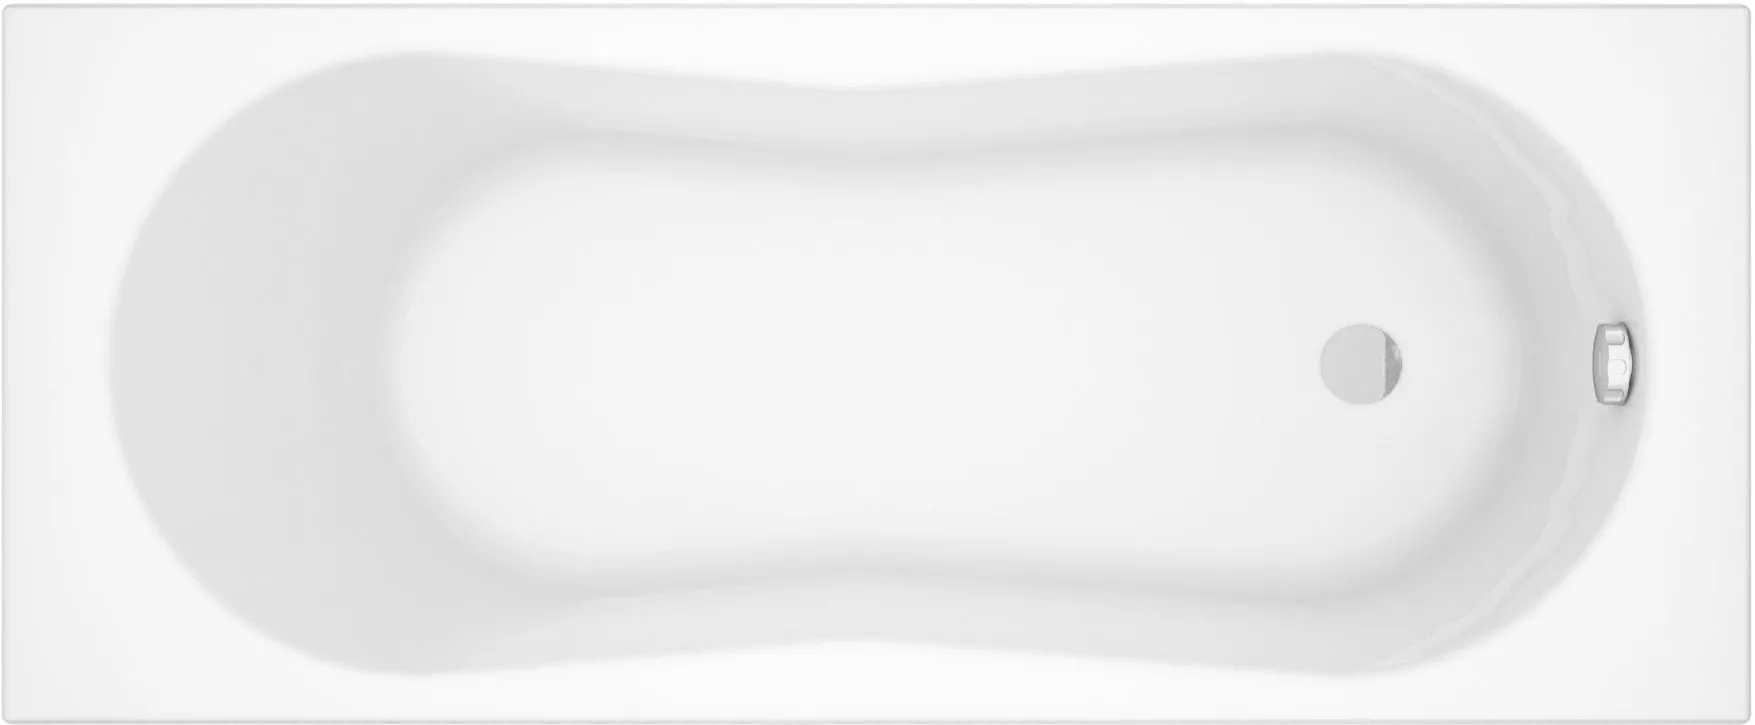 Акриловая ванна Cersanit Nike 170 ультра белый WP-NIKE*170 - фото 1